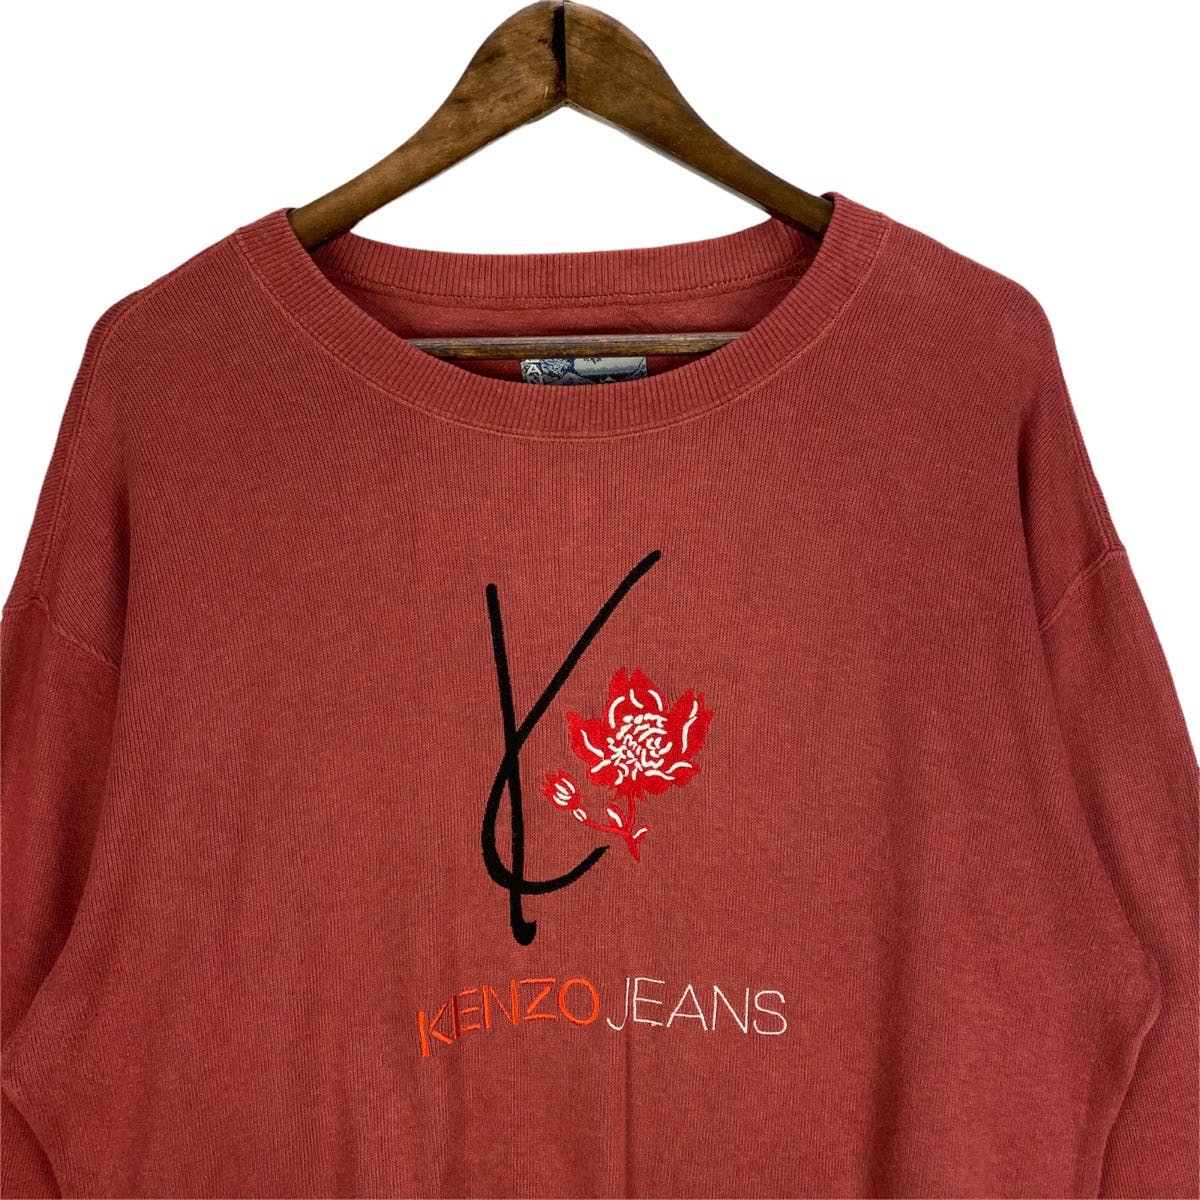 Vintage Kenzo Jeans Sweatshirt Embroidery Logo - 4